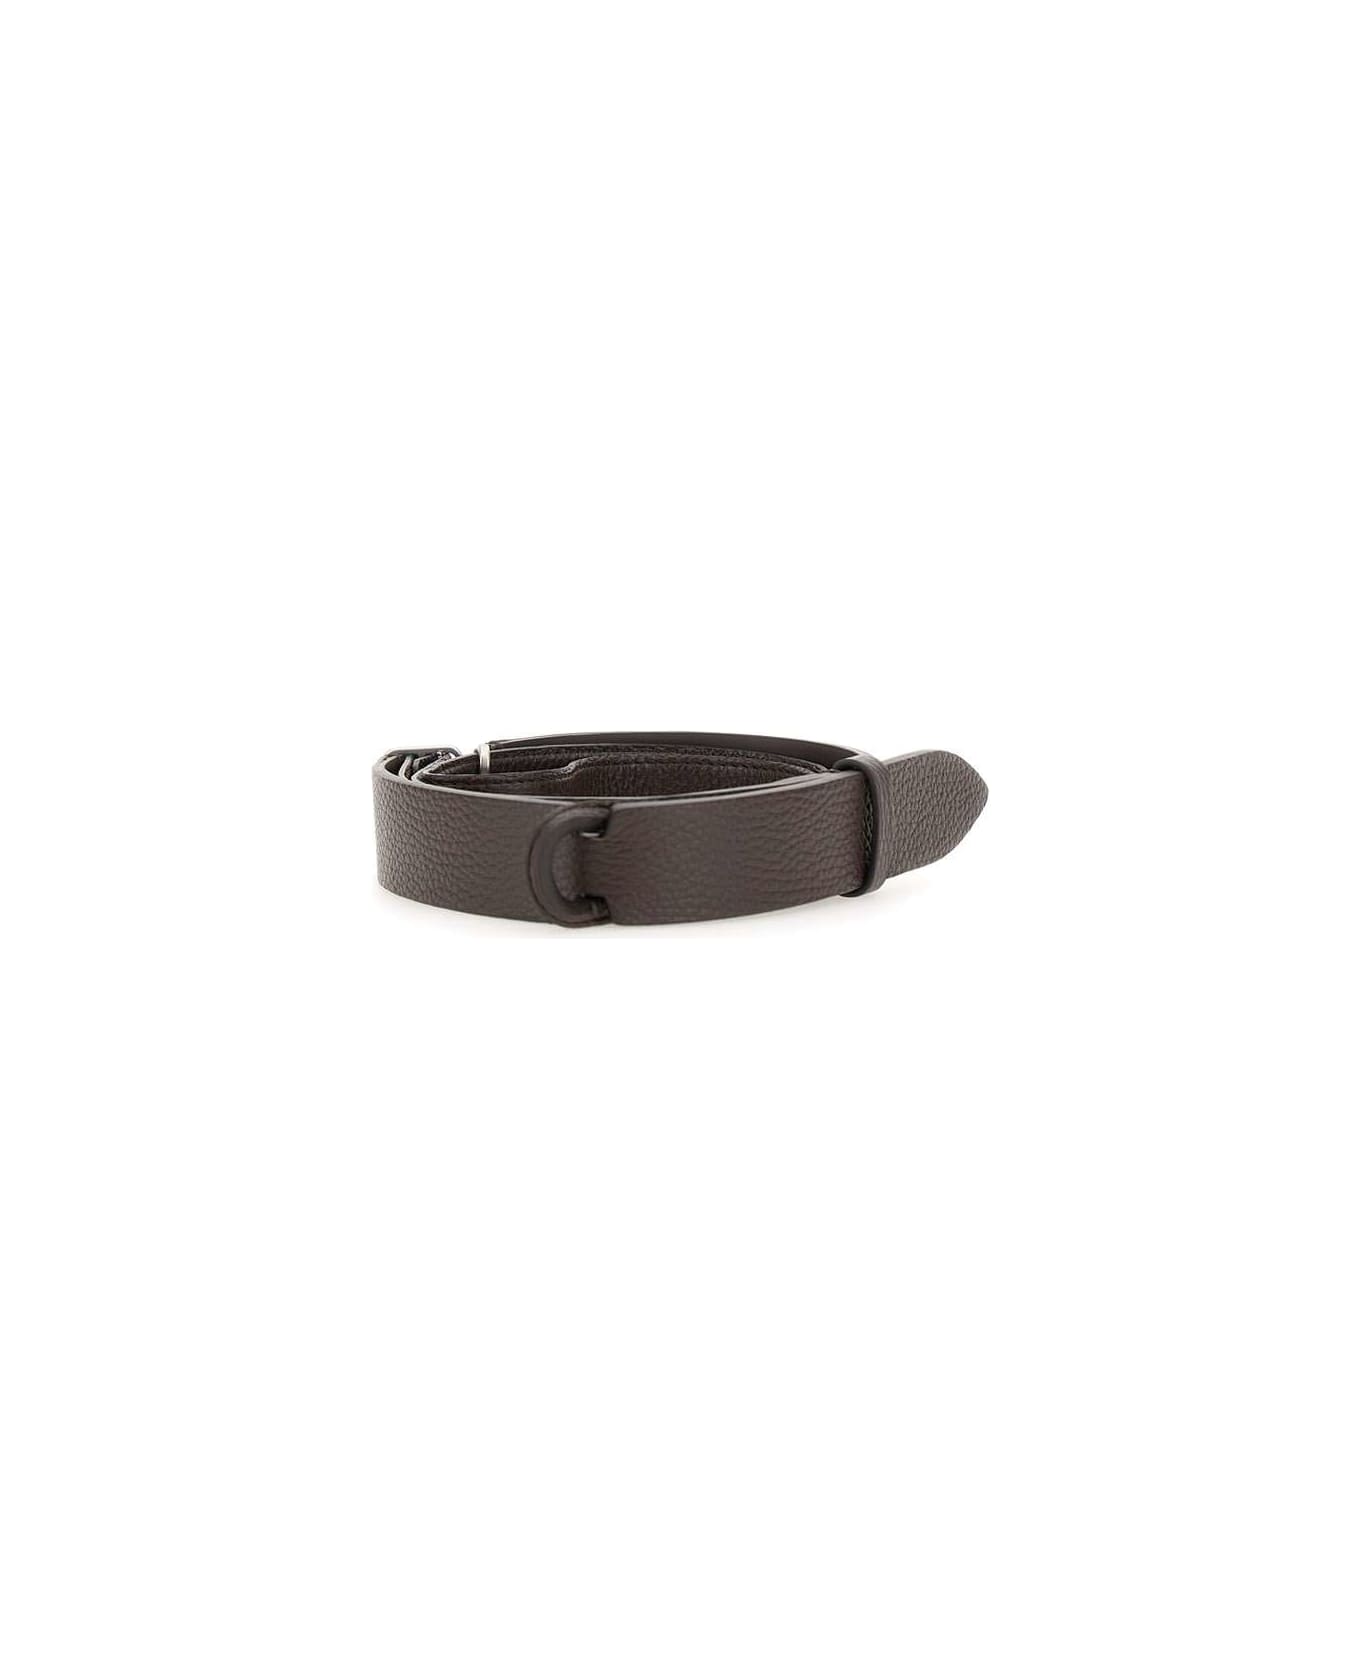 Orciani "nobukle Micron" Leather Belt - BROWN